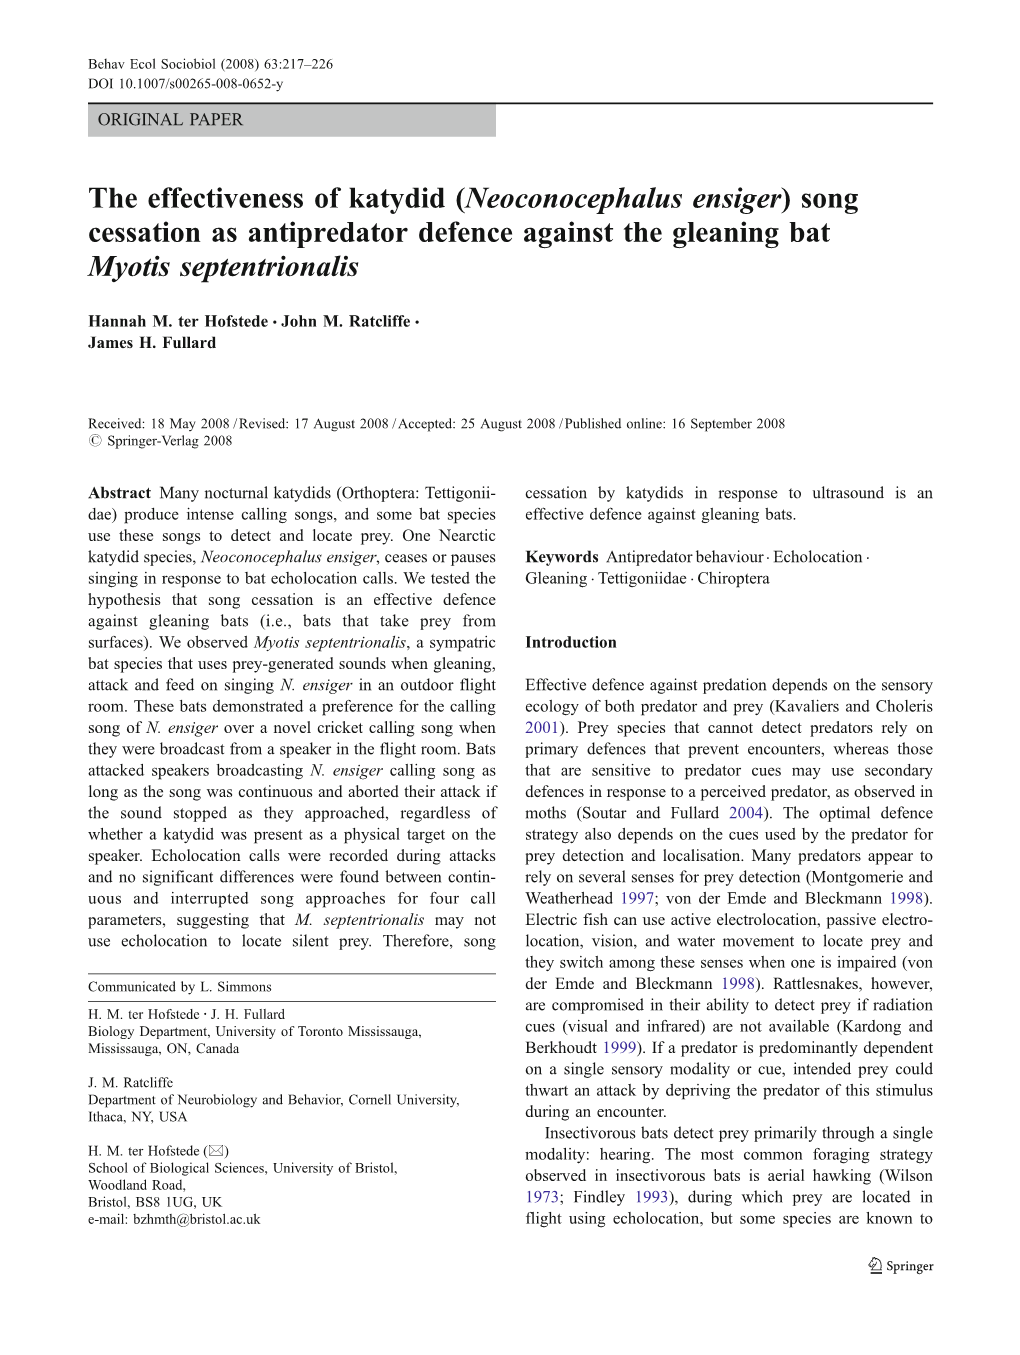 The Effectiveness of Katydid (Neoconocephalus Ensiger) Song Cessation As Antipredator Defence Against the Gleaning Bat Myotis Septentrionalis